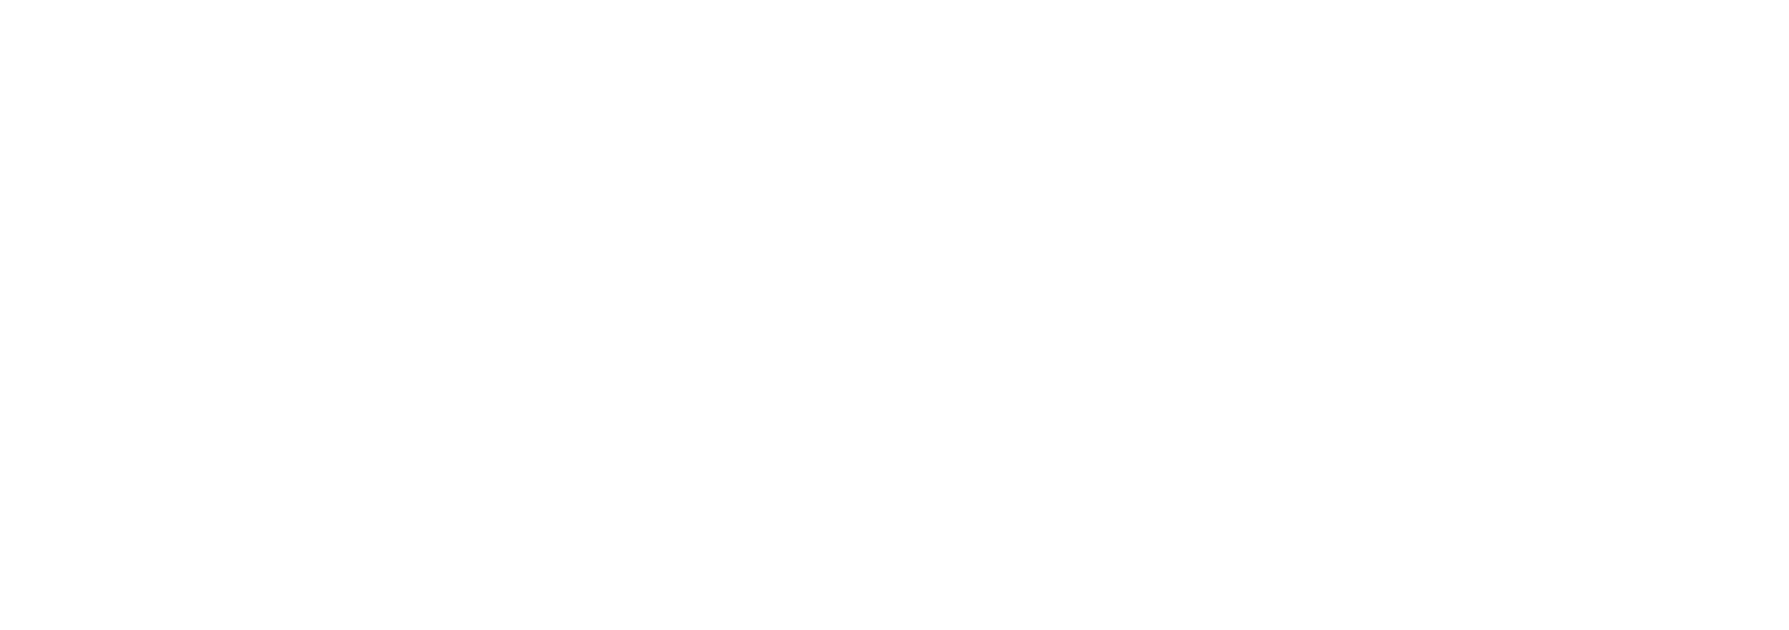 The Penthouse Logo